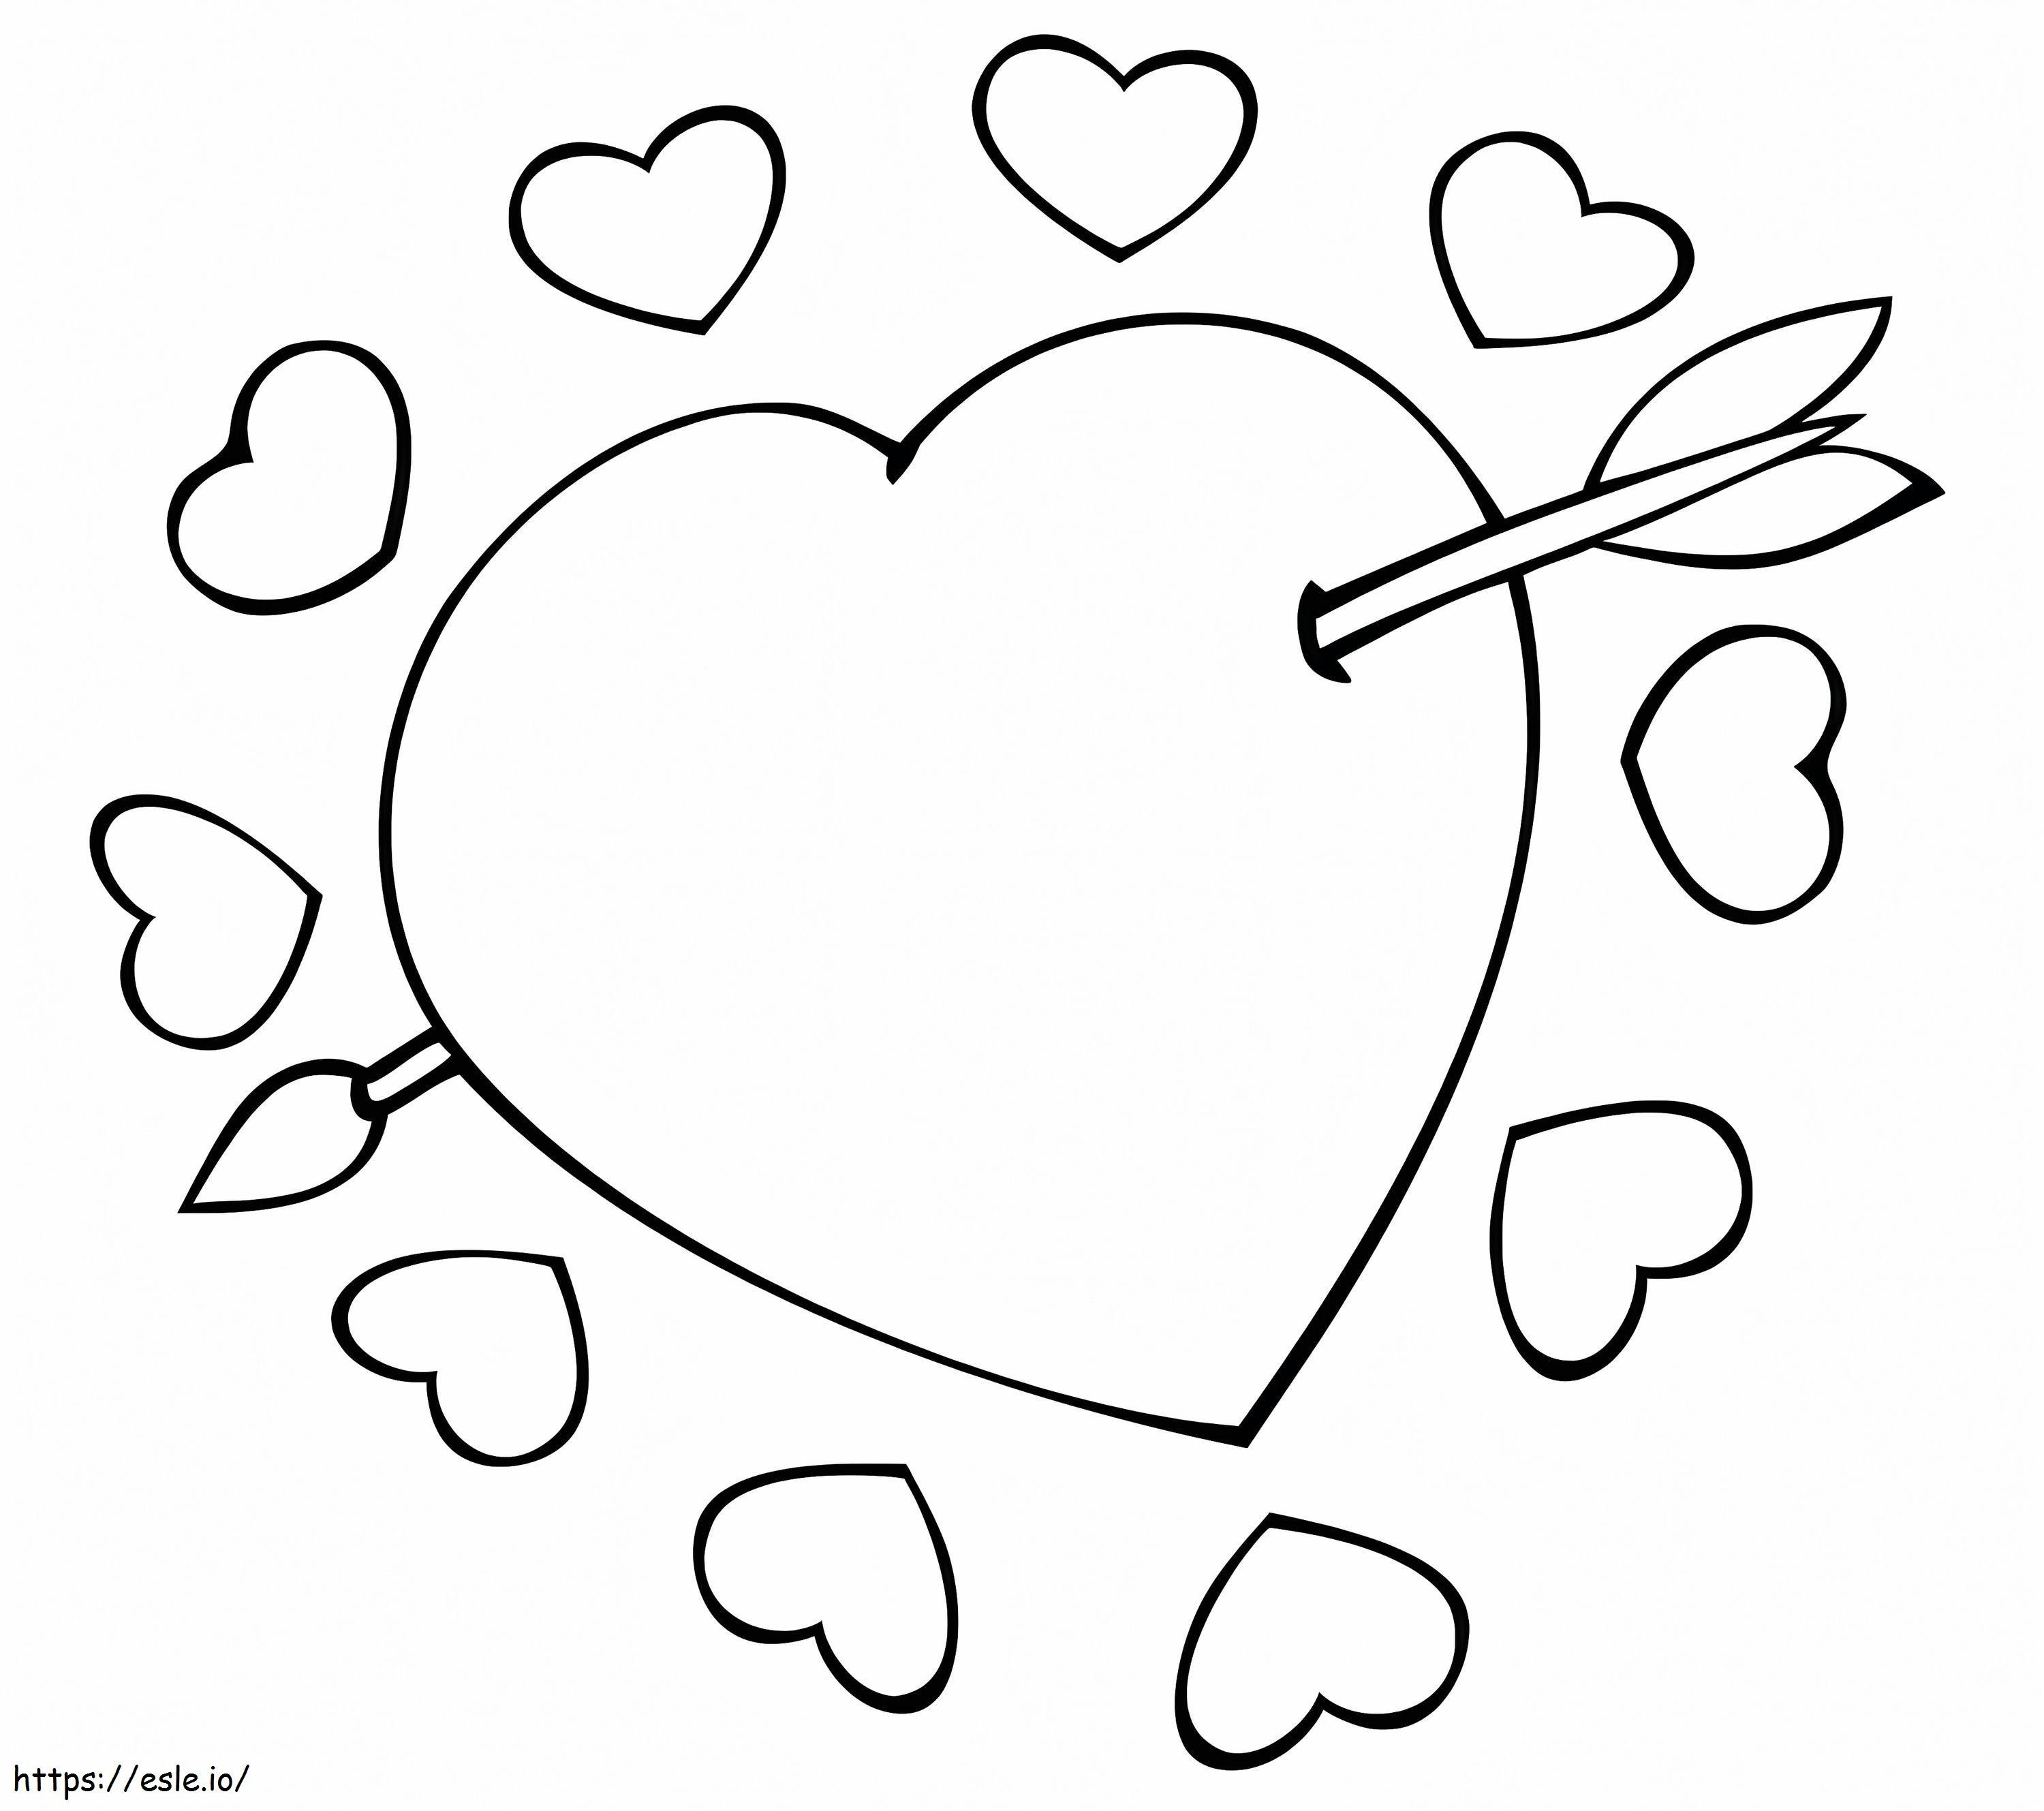 Arrow Through Heart coloring page